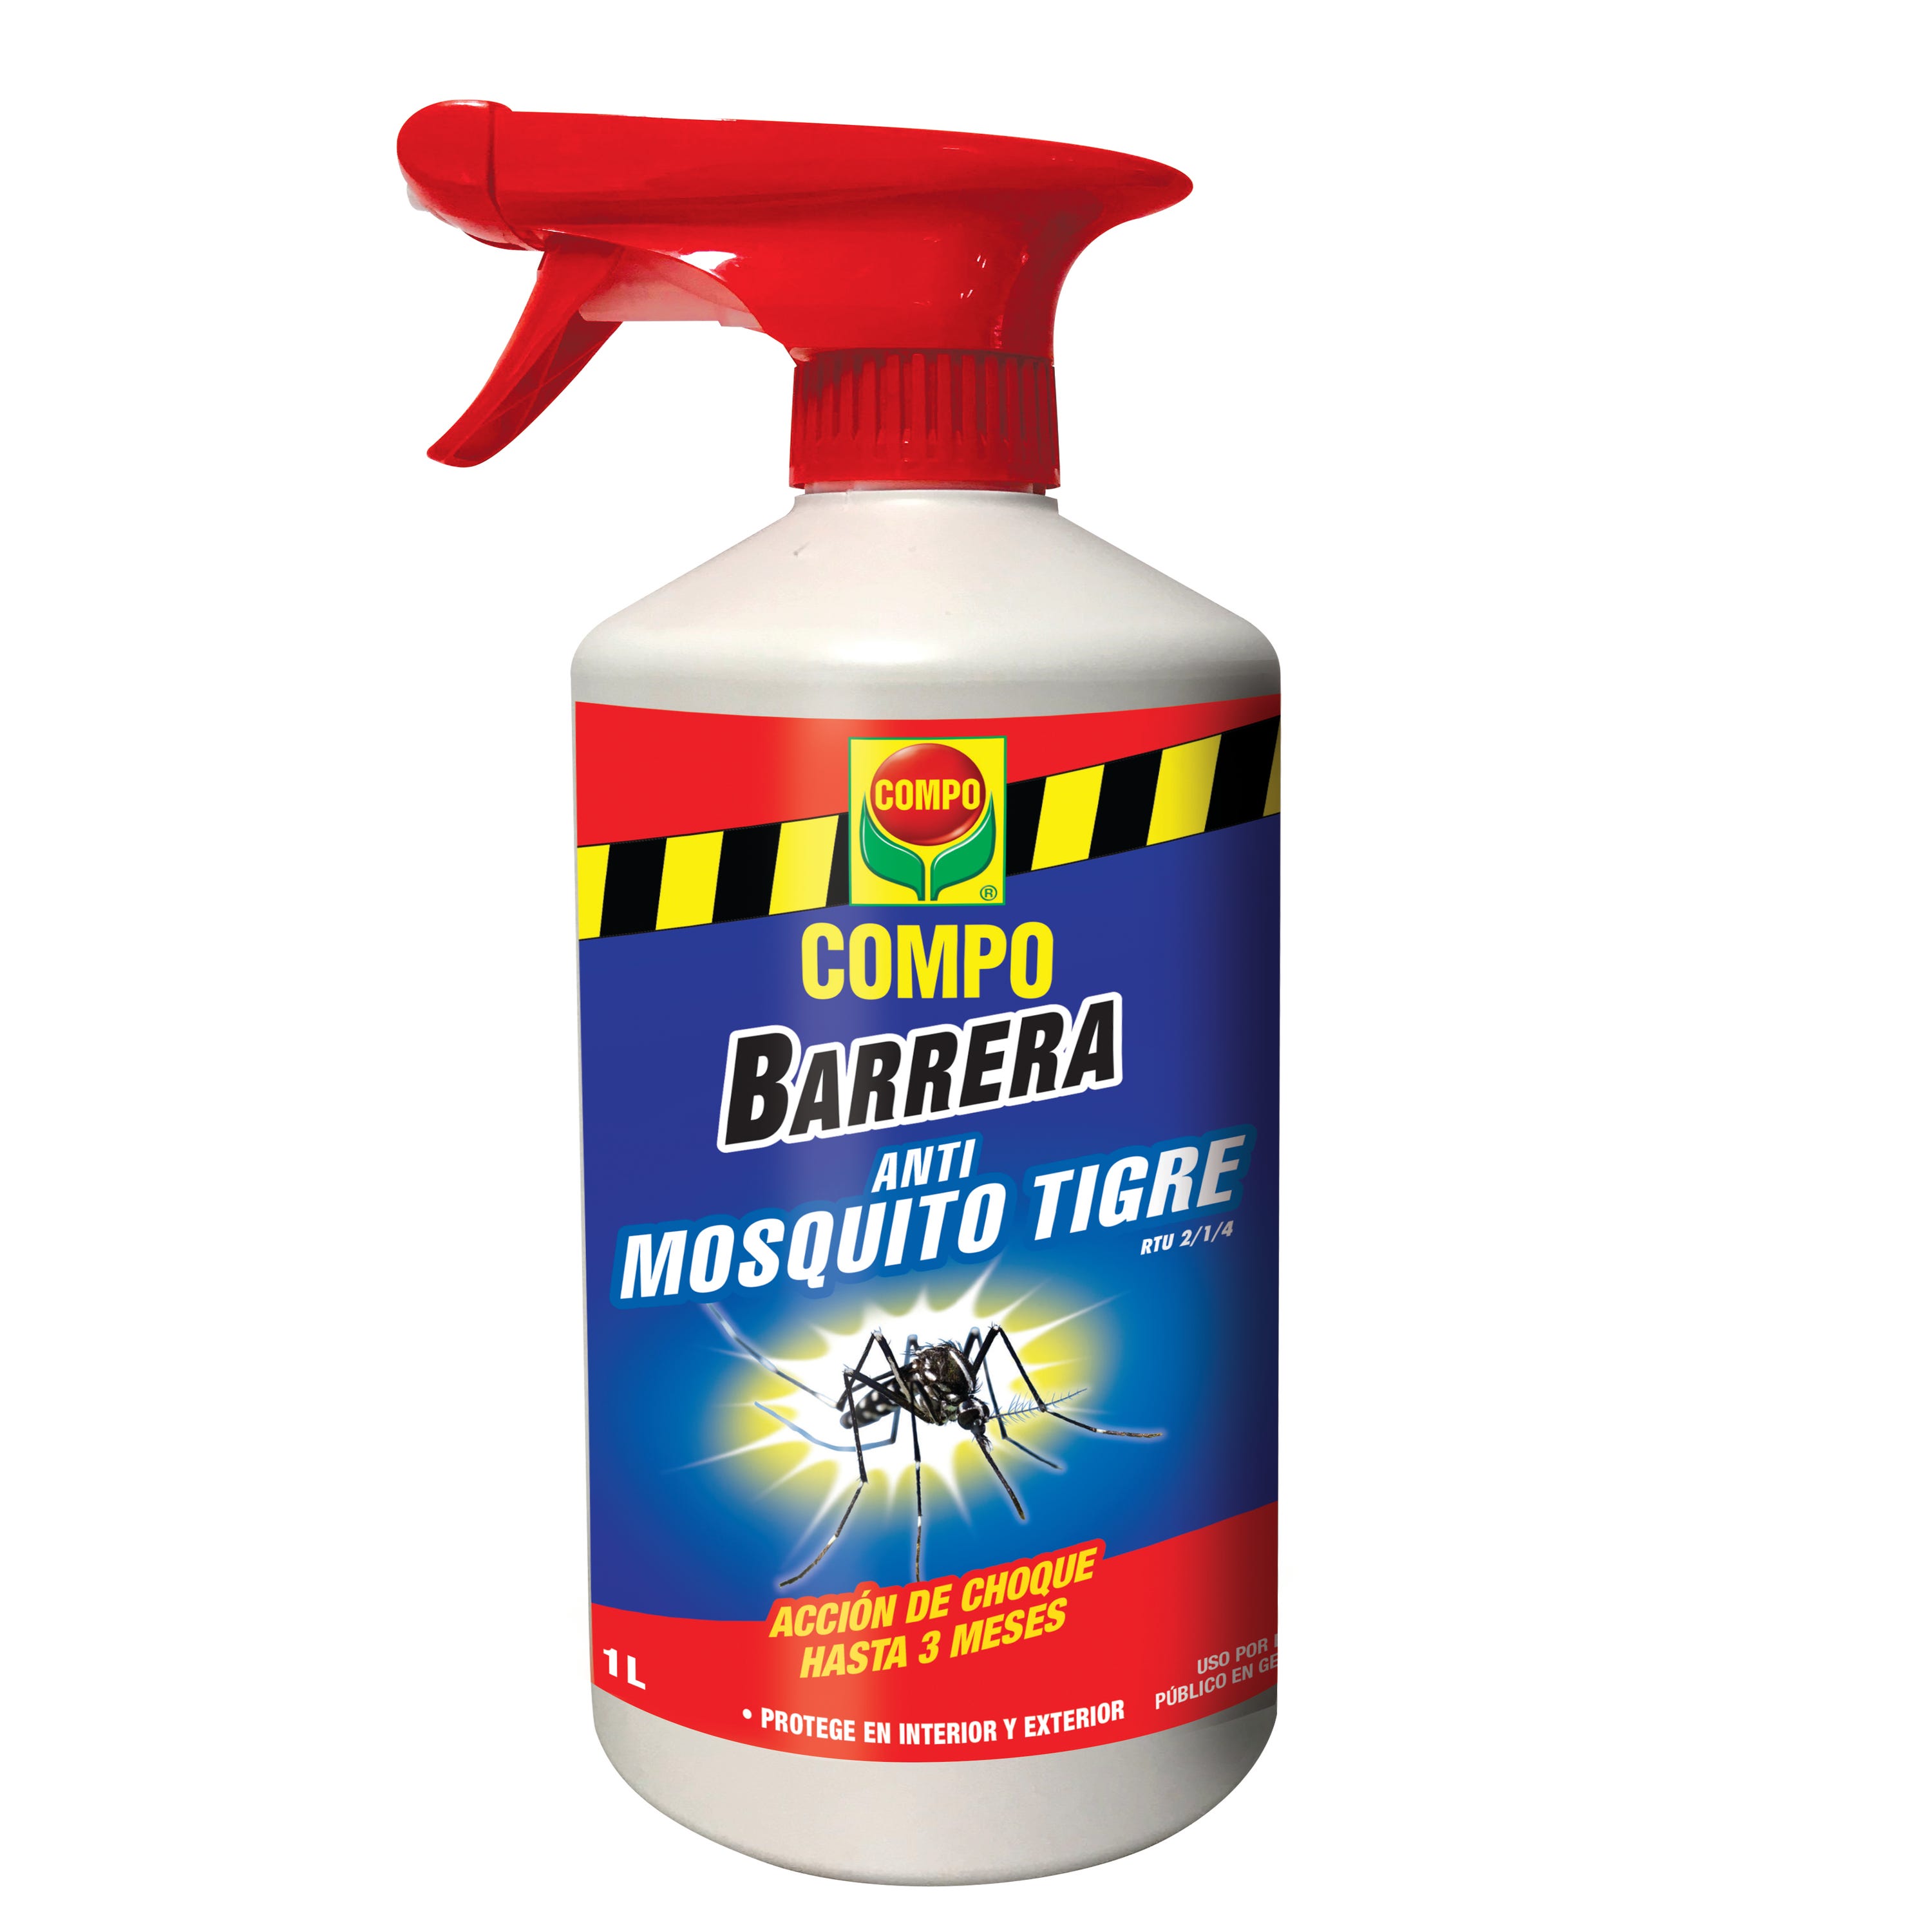 Tela mosquitera: Todo sobre esta barrera antimosquitos